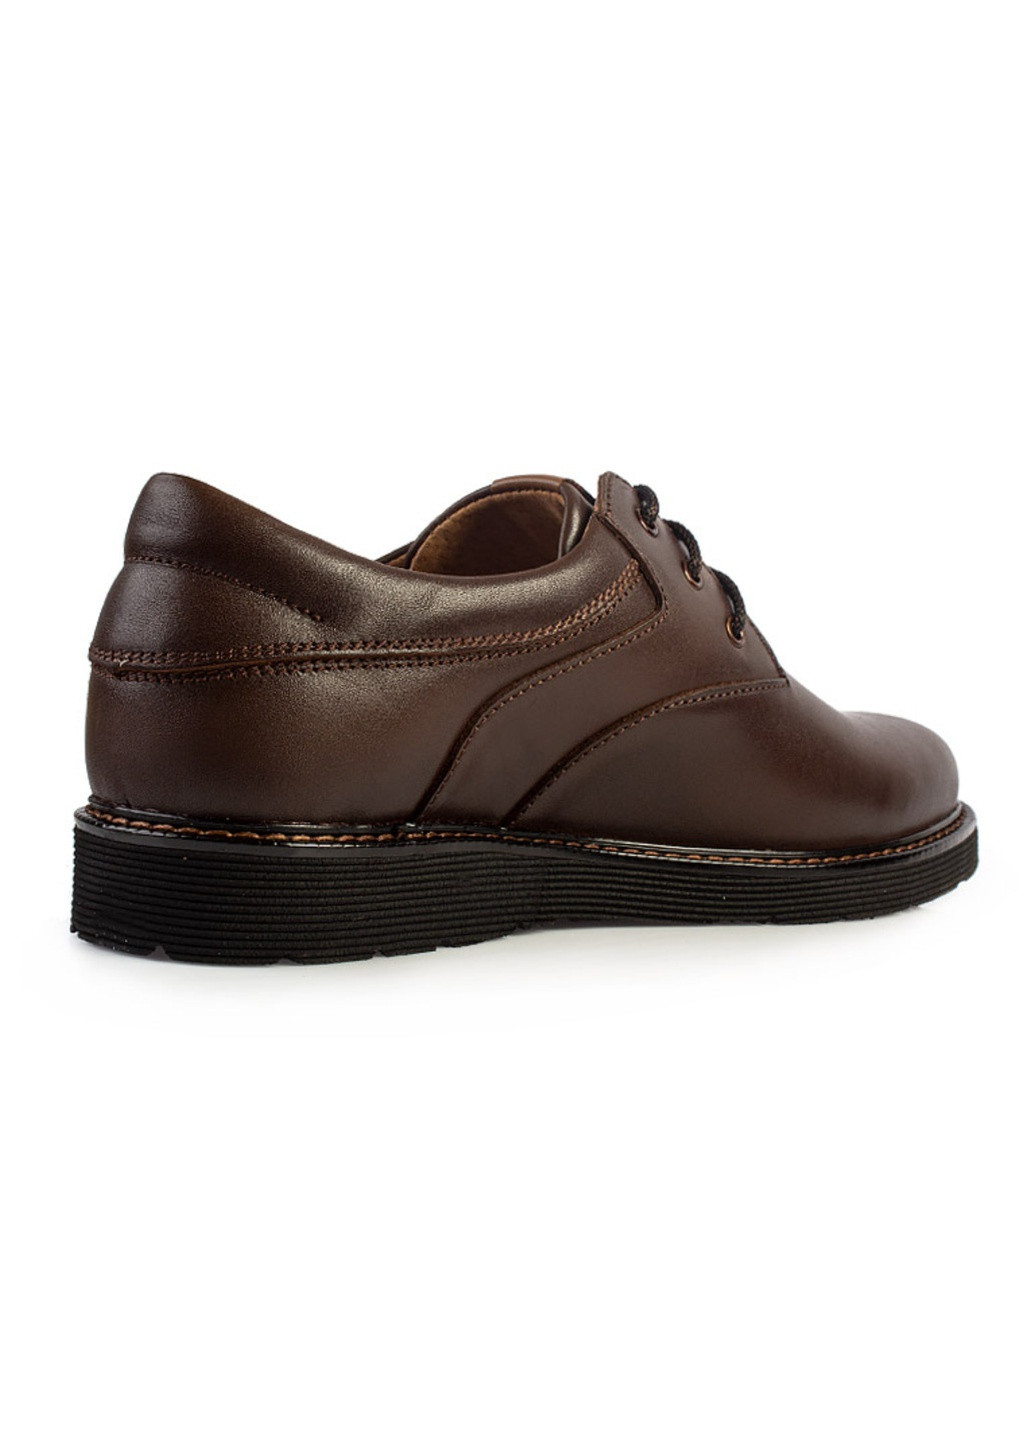 Коричневые классические туфли мужские бренда 9402119_(1) ModaMilano на шнурках